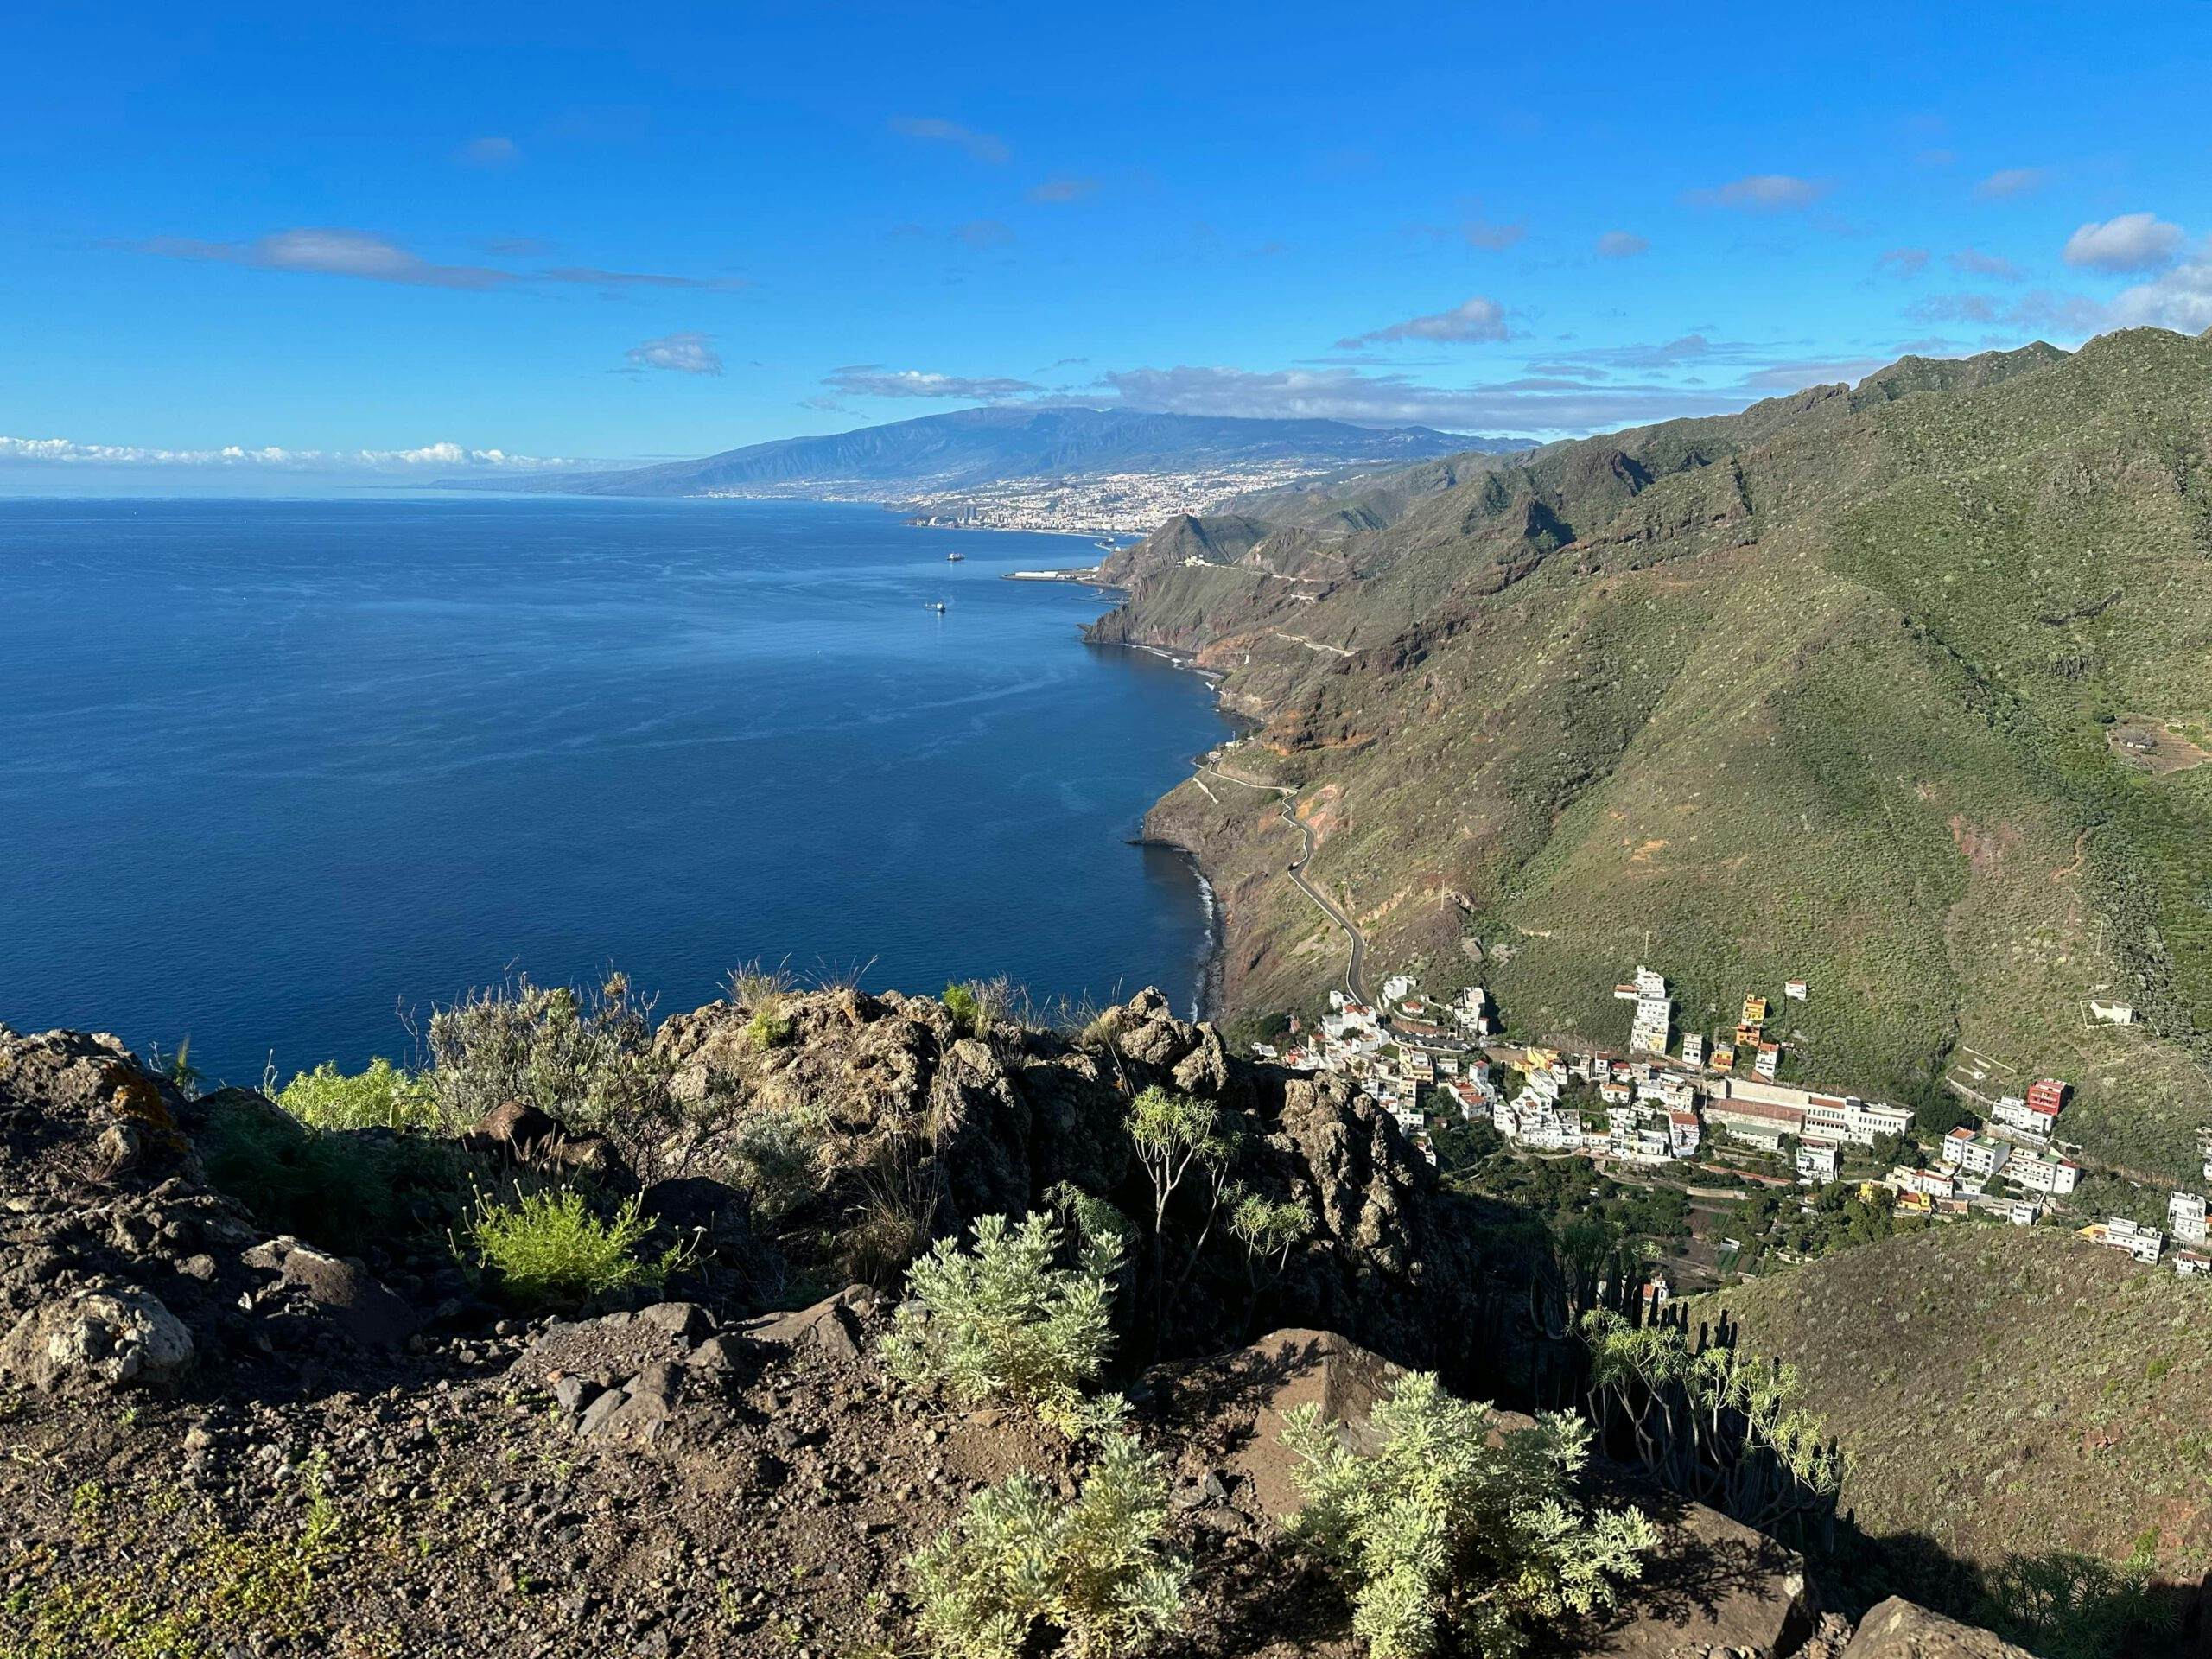 View from the ridge over Igueste and towards Santa Cruz de Tenerife